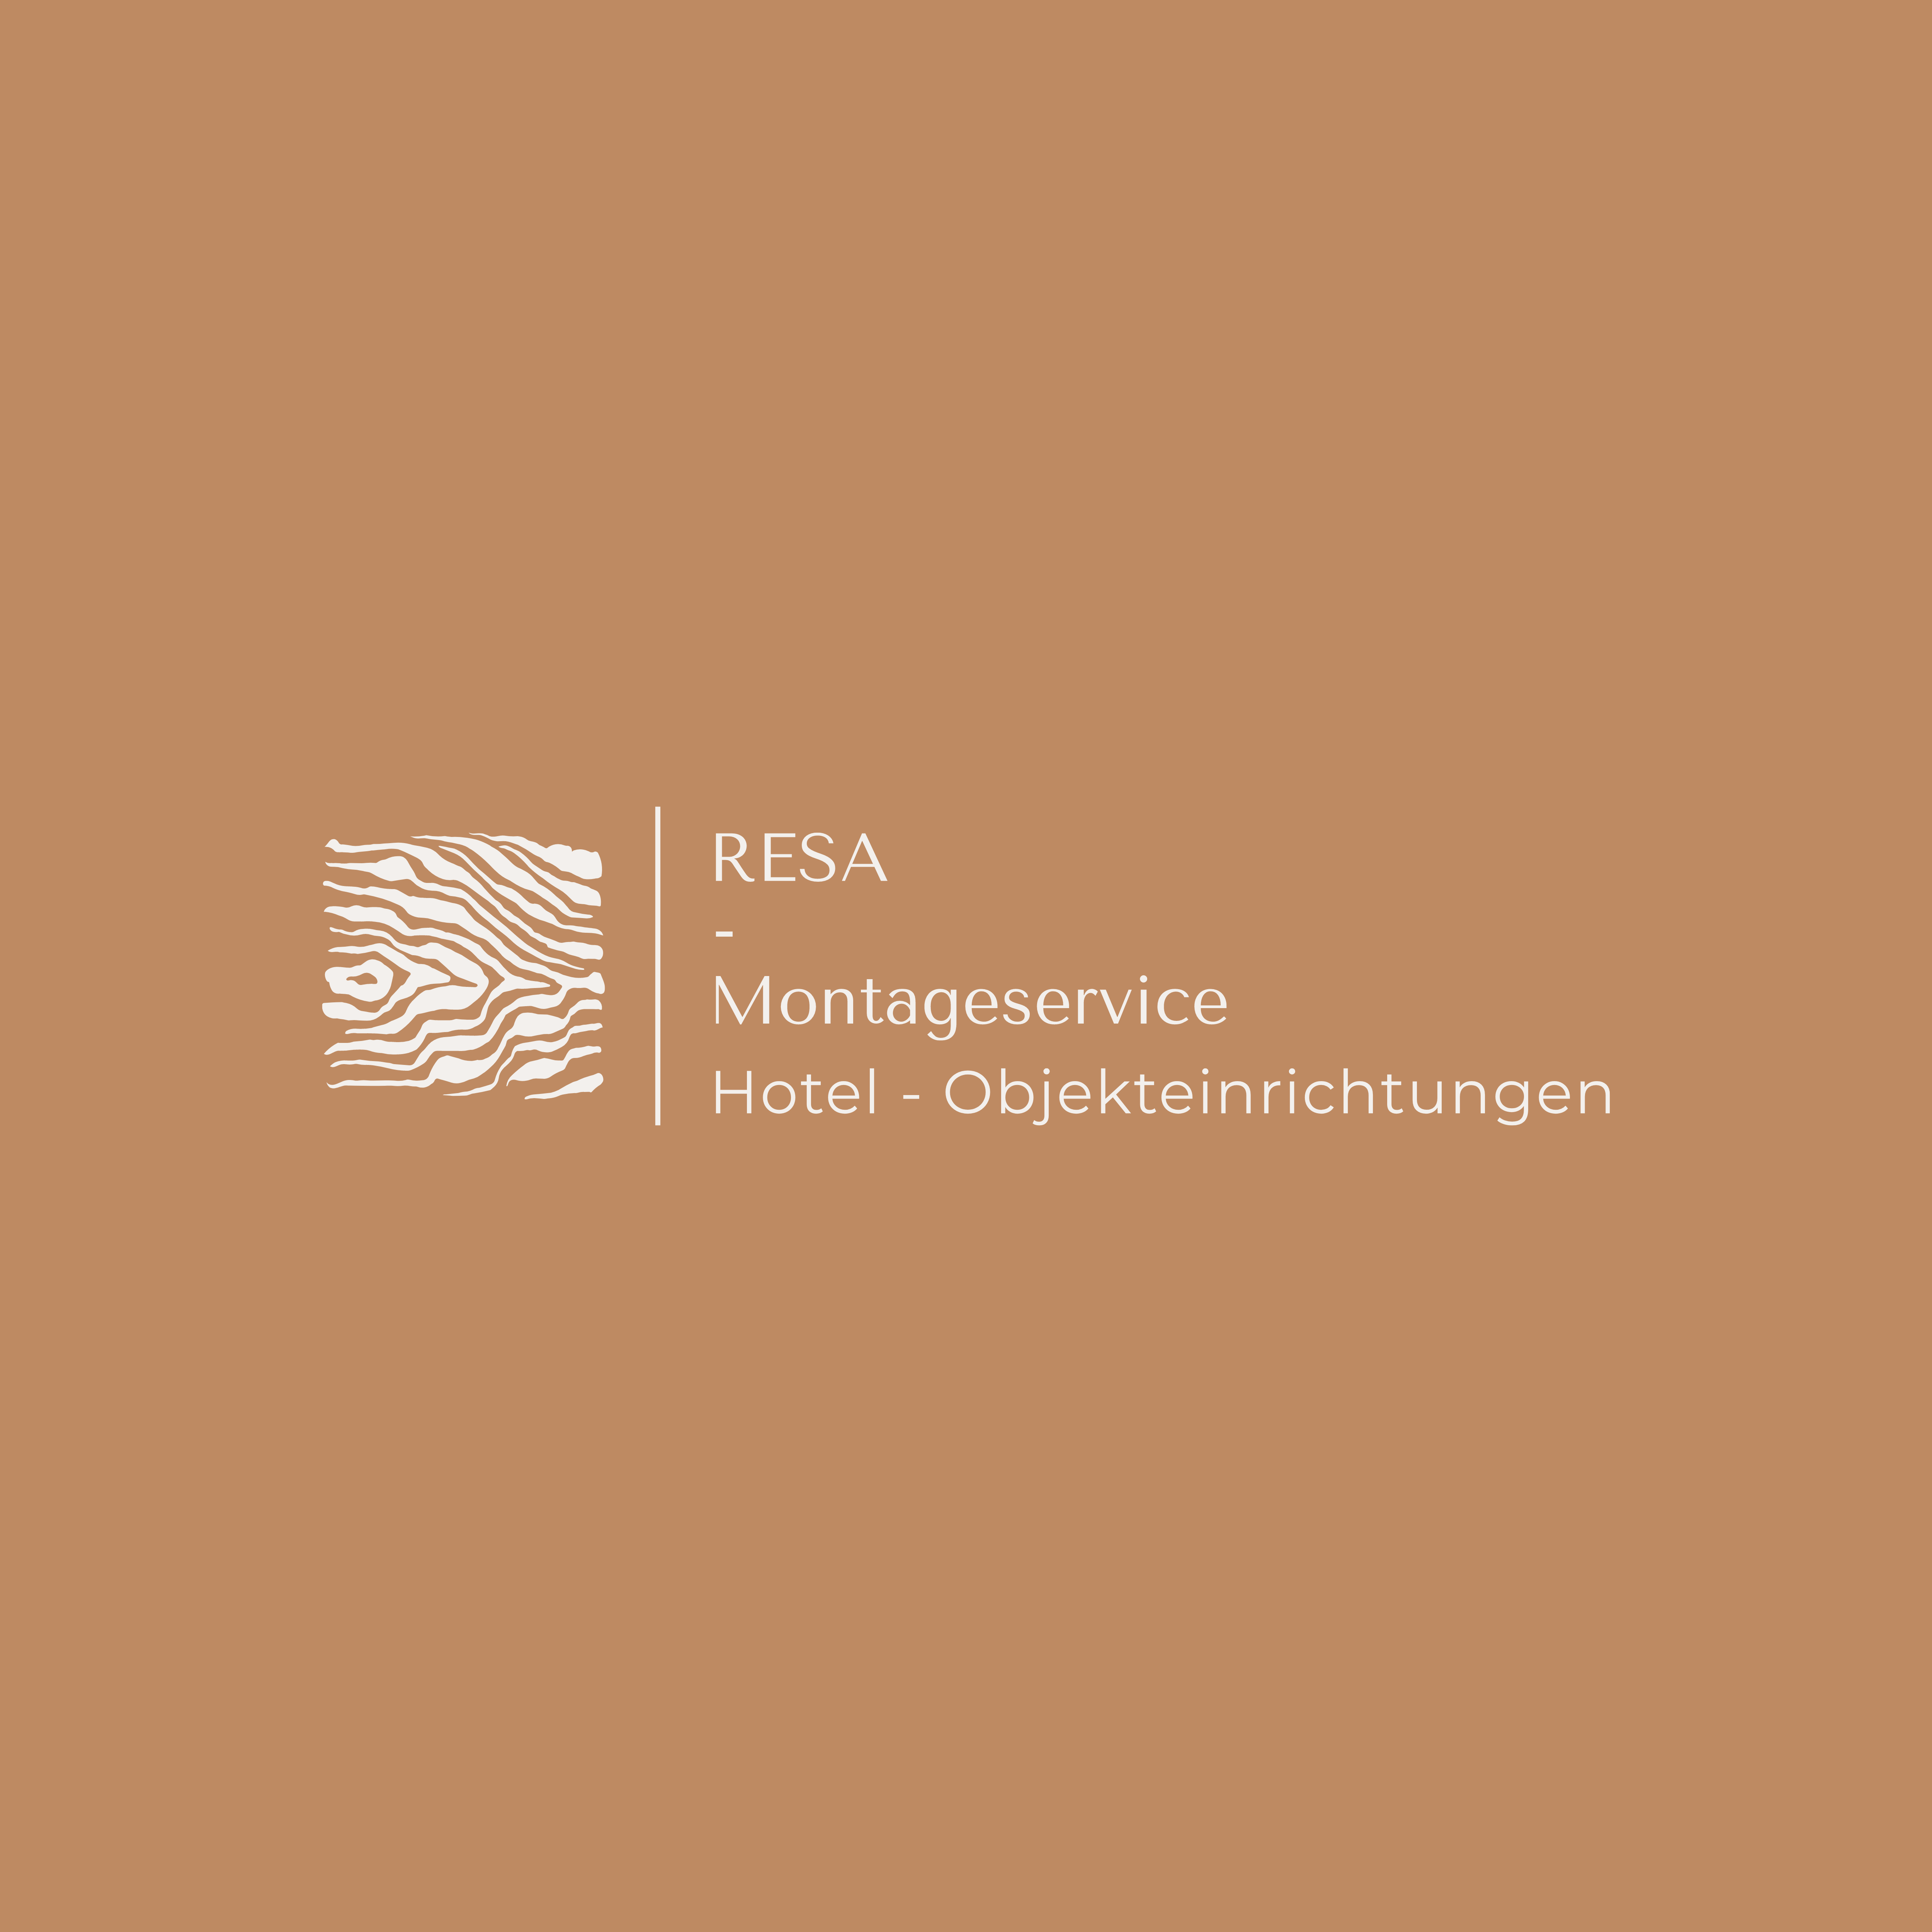 RESA-Montageservice, Agnes Sassenberg